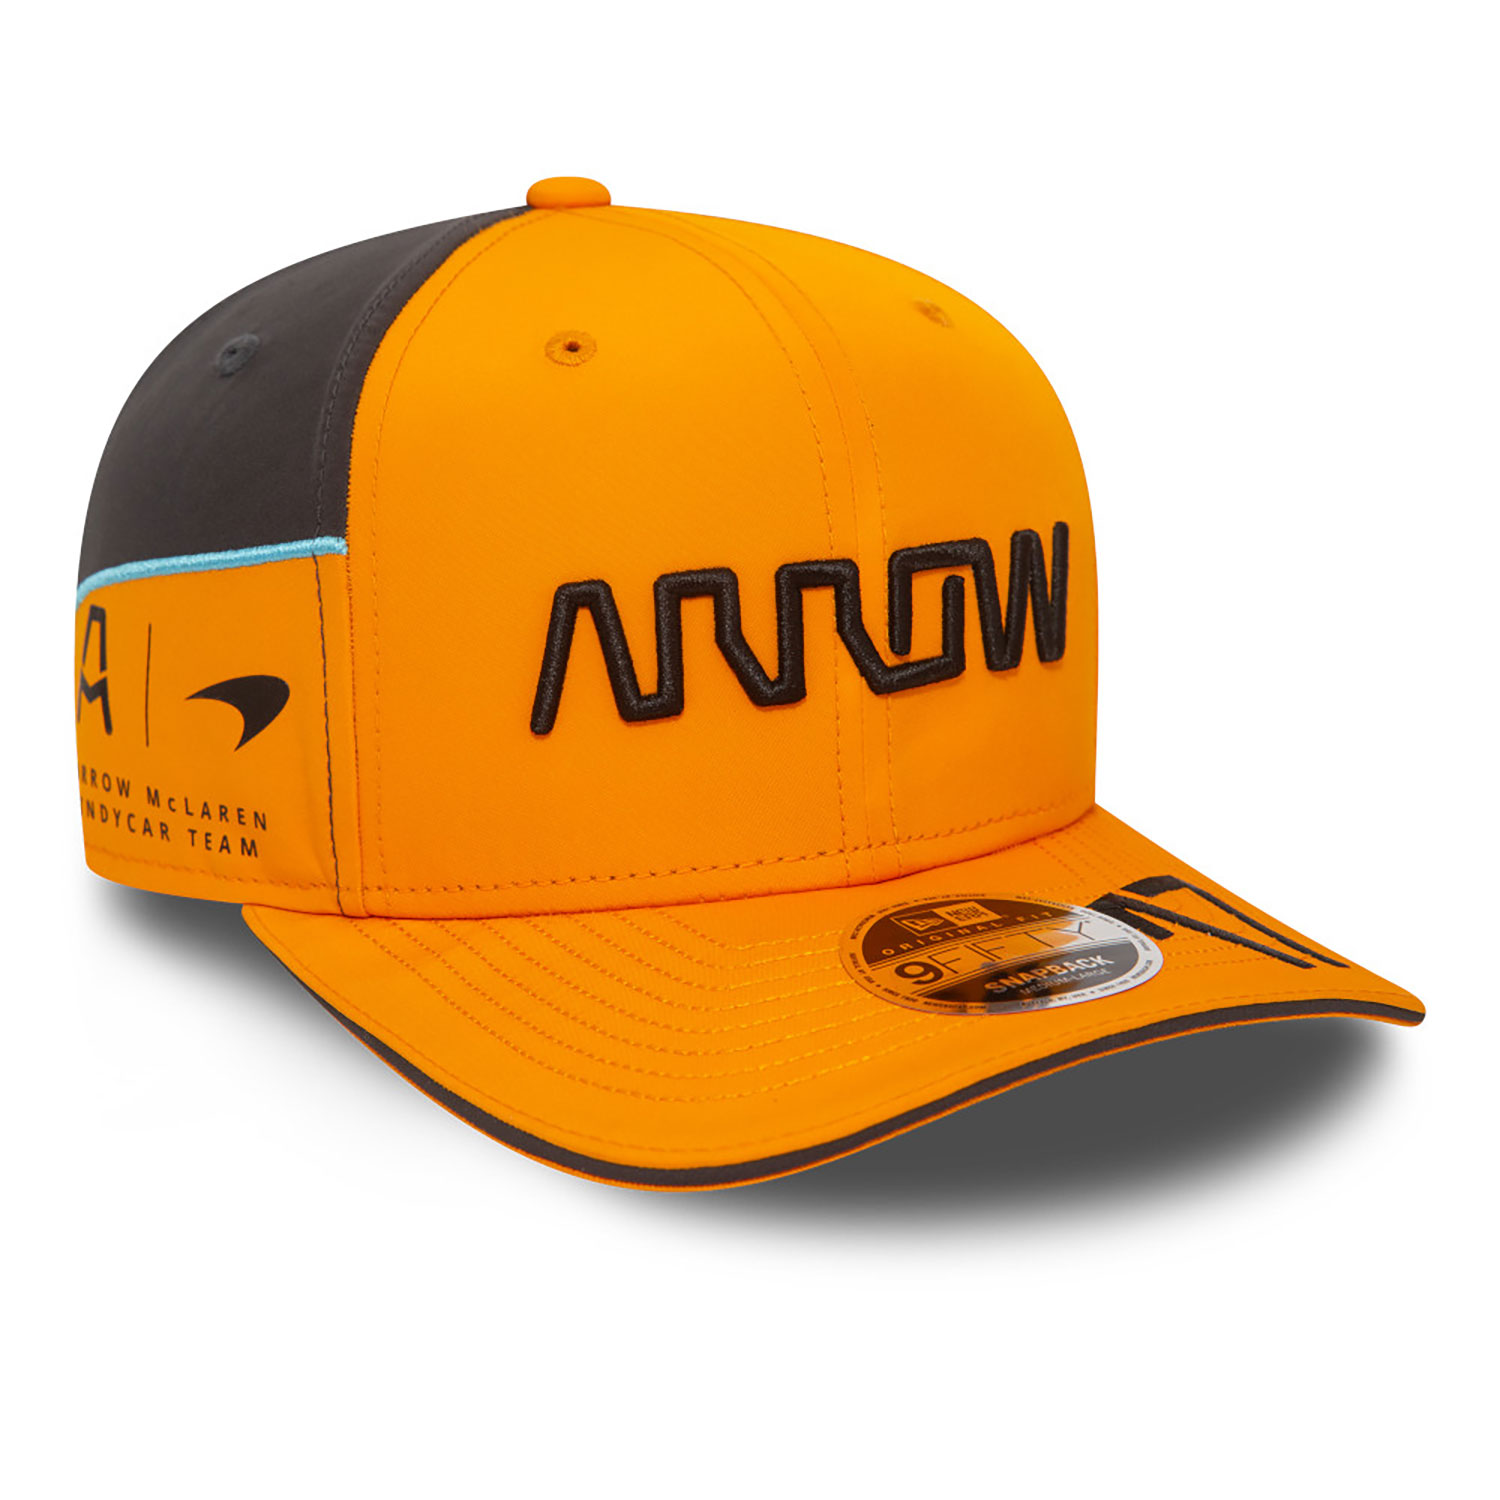 McLaren Racing Indy Team Arrow Orange 9FIFTY Snapback Original Fit Cap